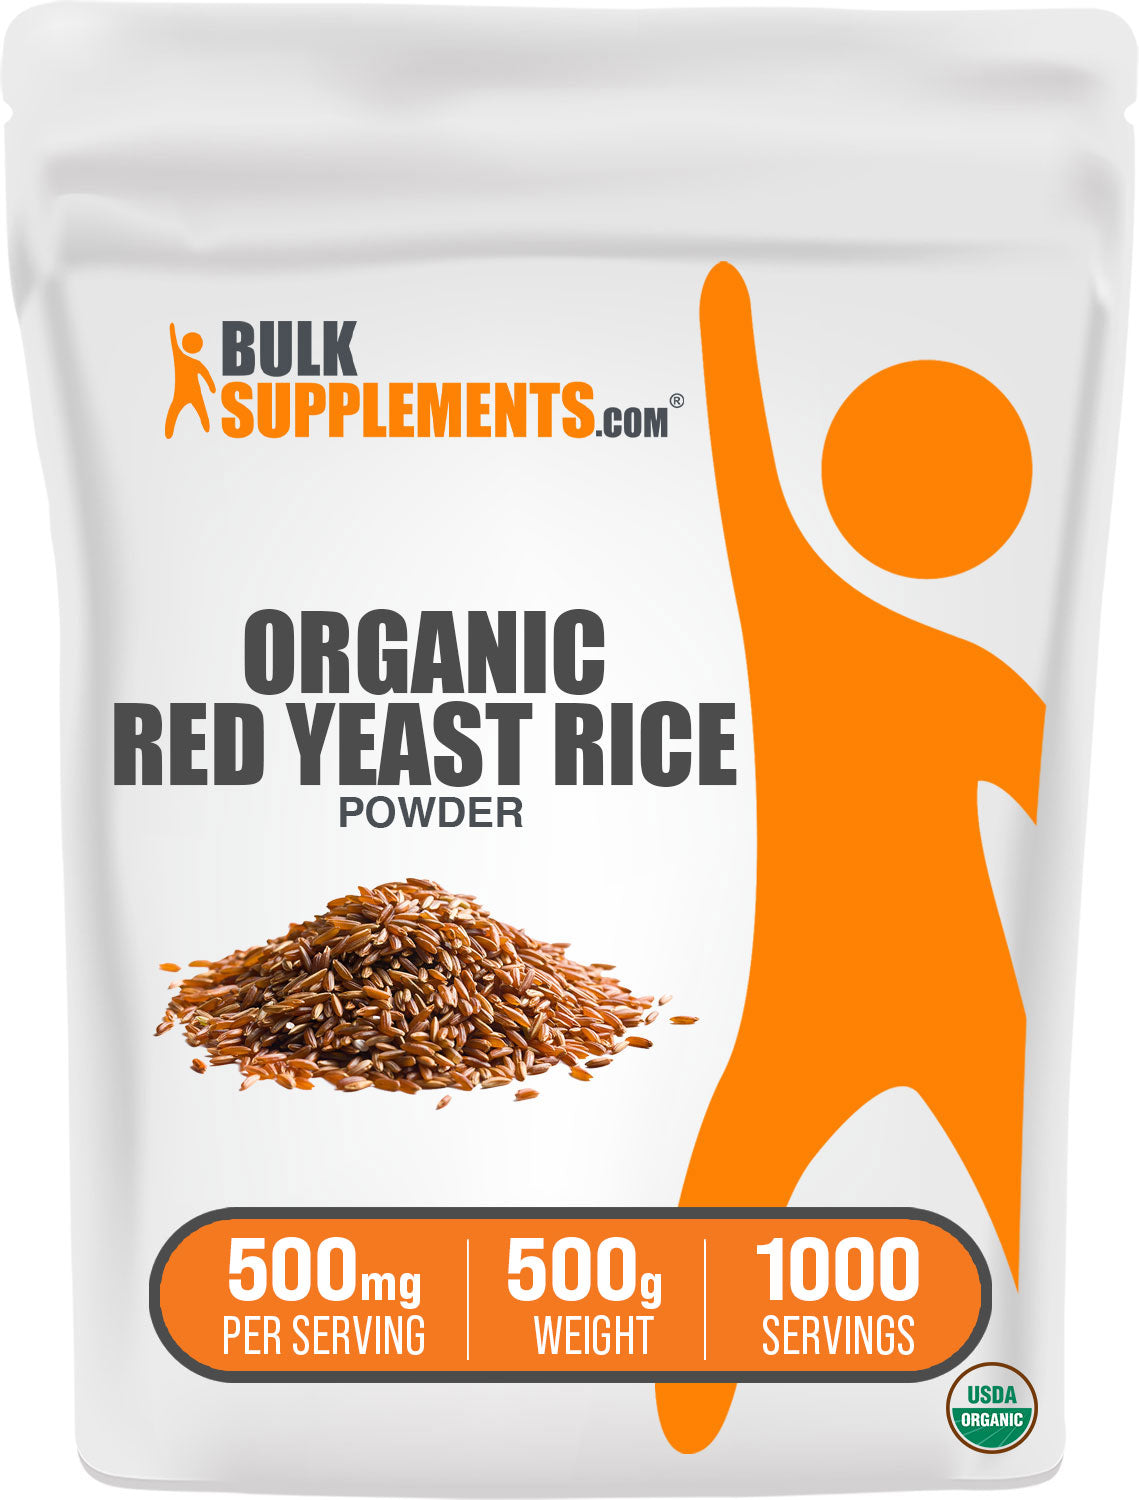 BulkSupplements.com Organic Red Yeast Rice Powder 500g Bag